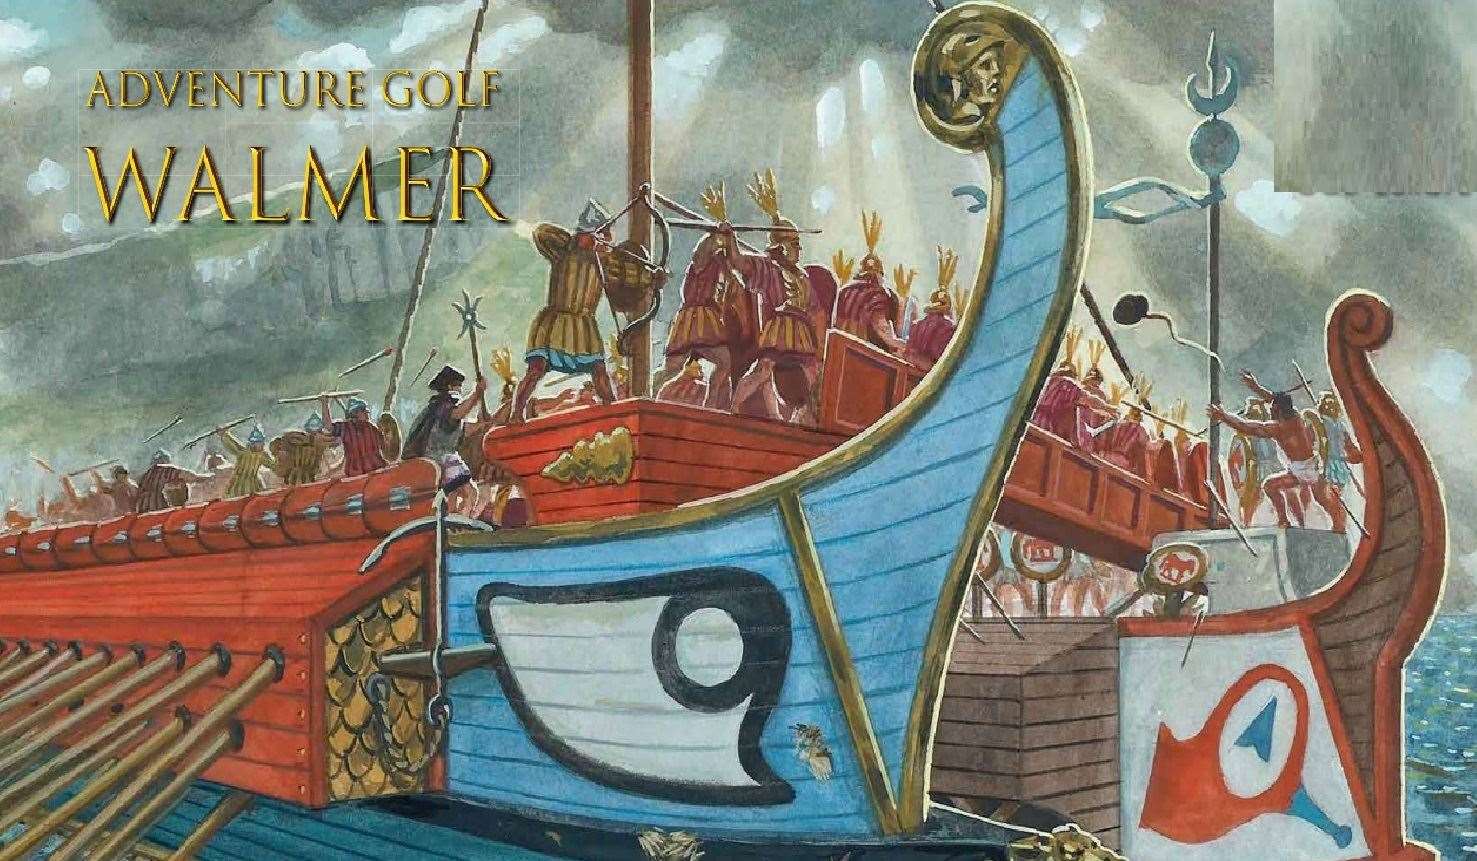 Roman Landings will open in Walmer this summer